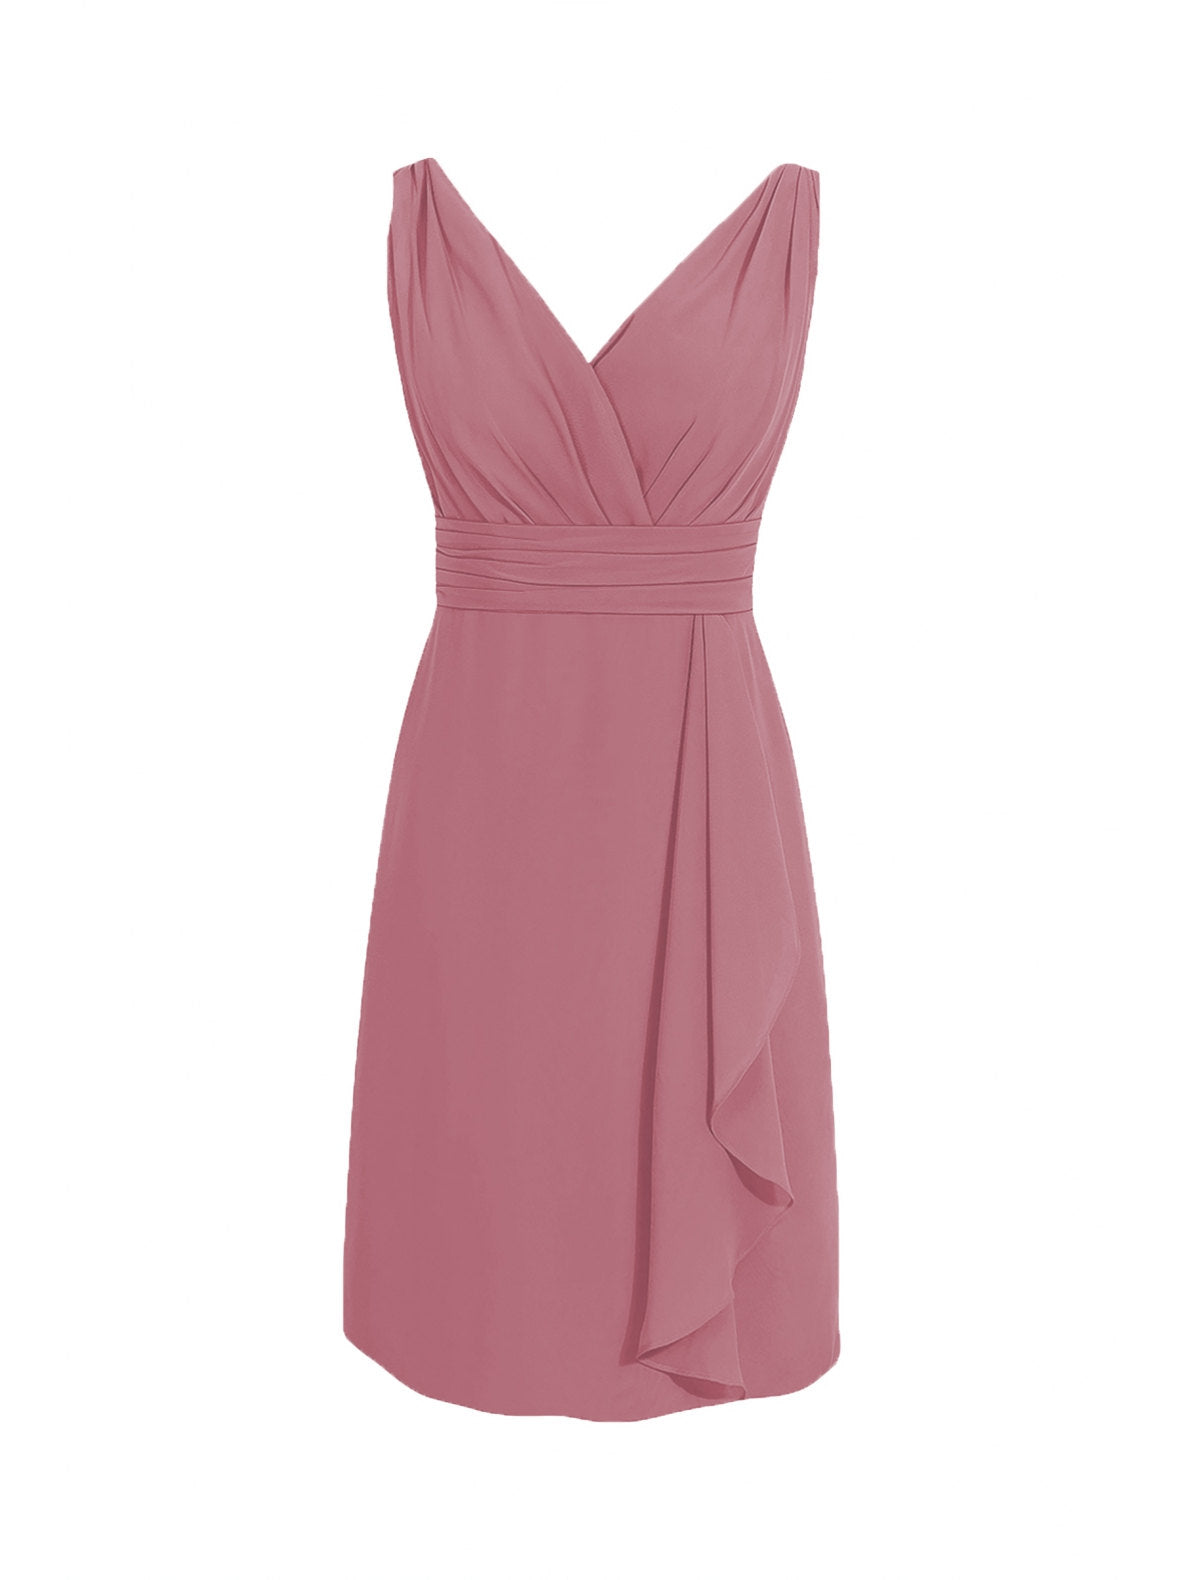 Chiffon V-Neck Sleeveless Bridesmaid Dress| Plus Size | 60+ Colors